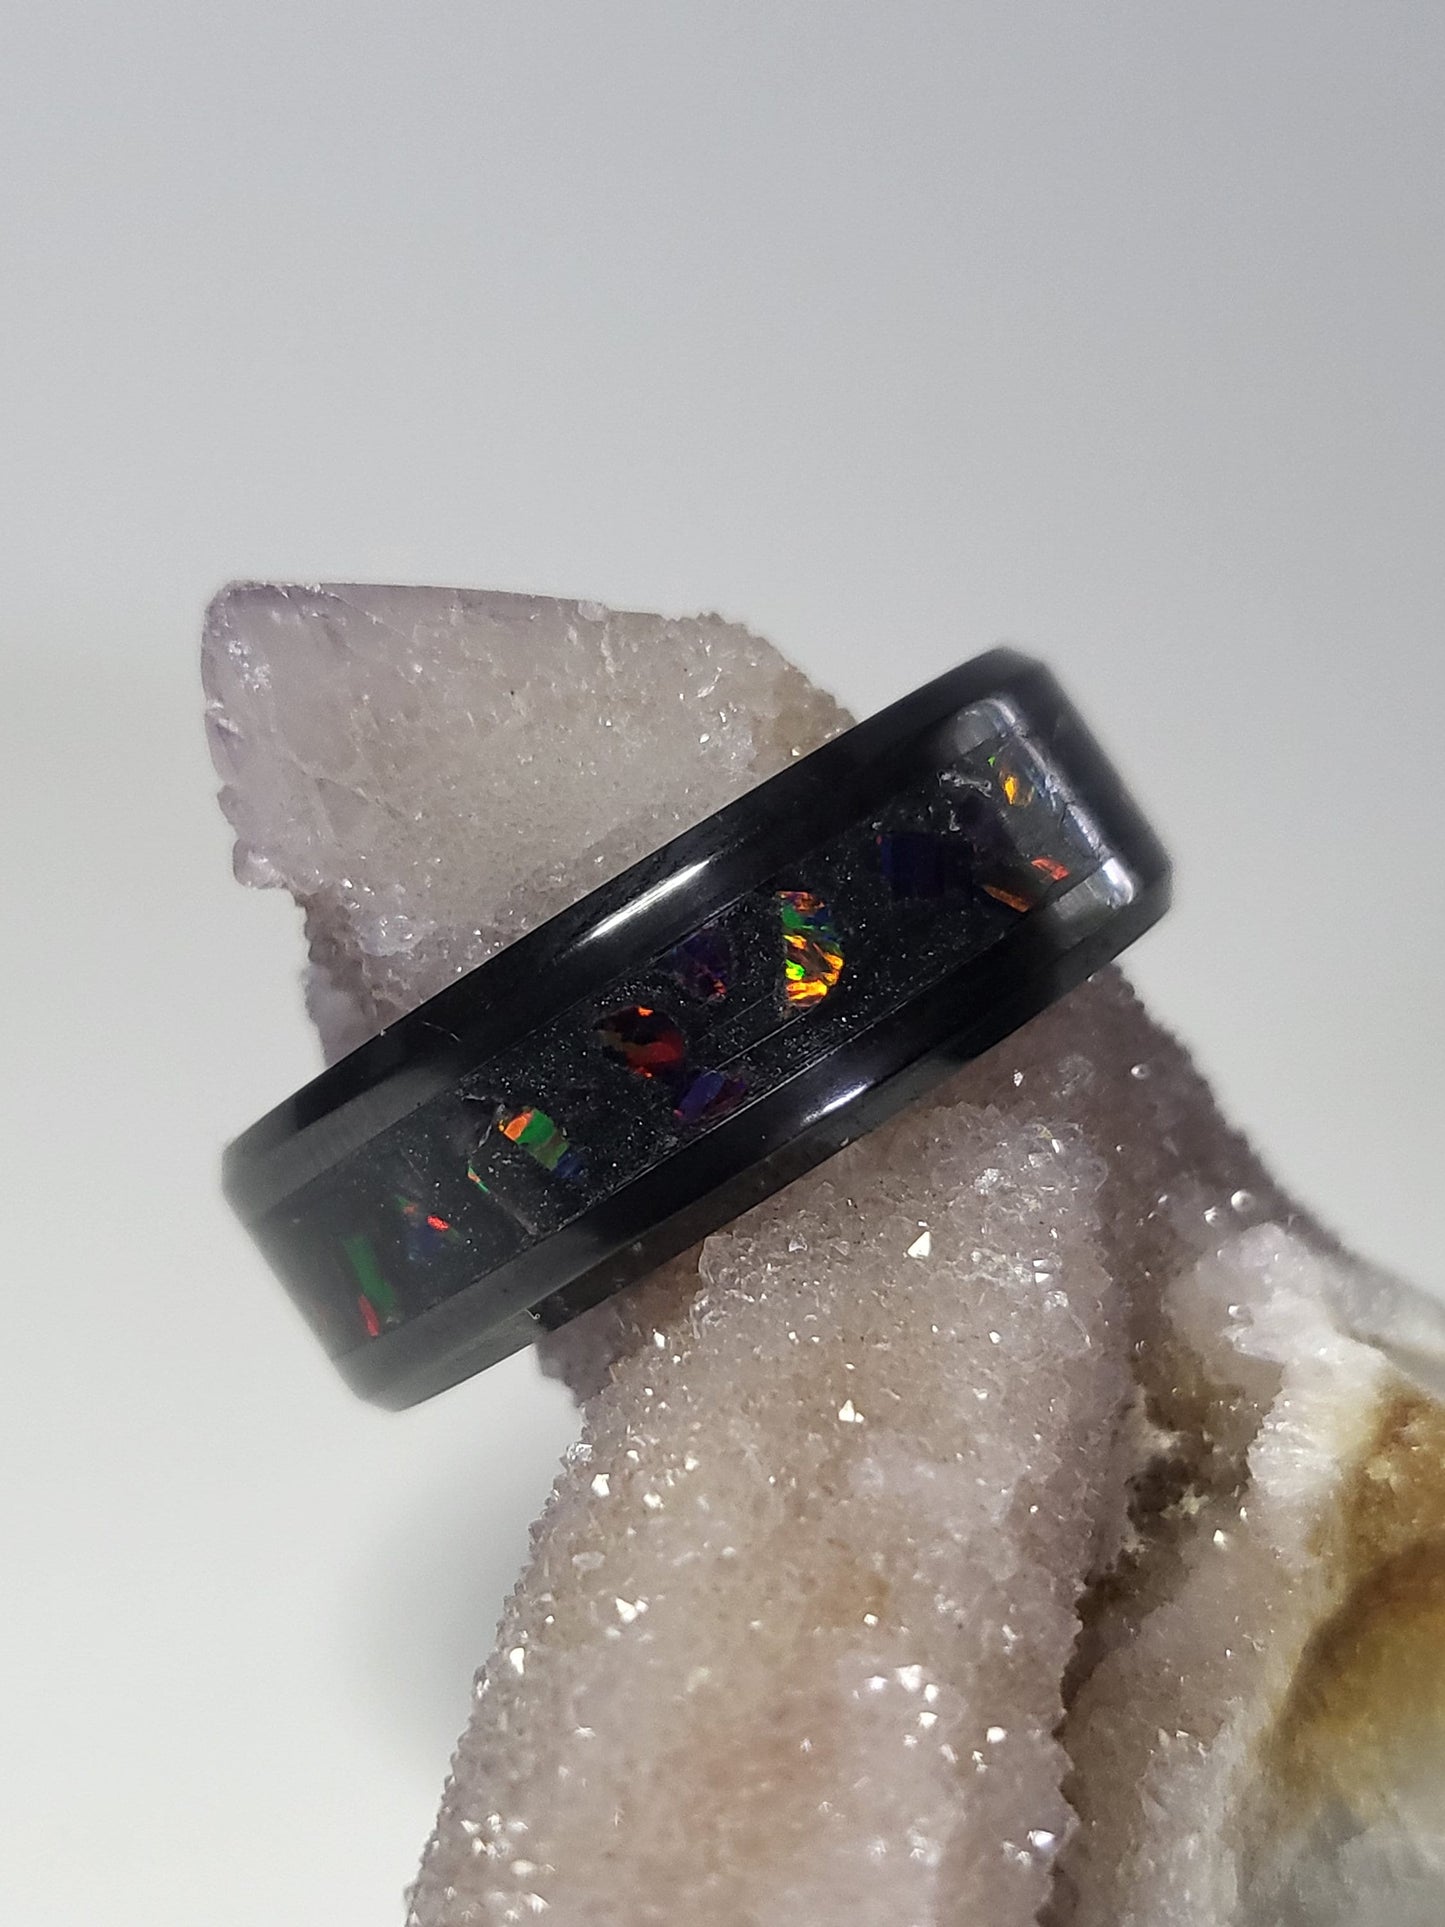 Black Ceramic Ring Ember Opal, Amethyst, Quartz UV Glow Powder